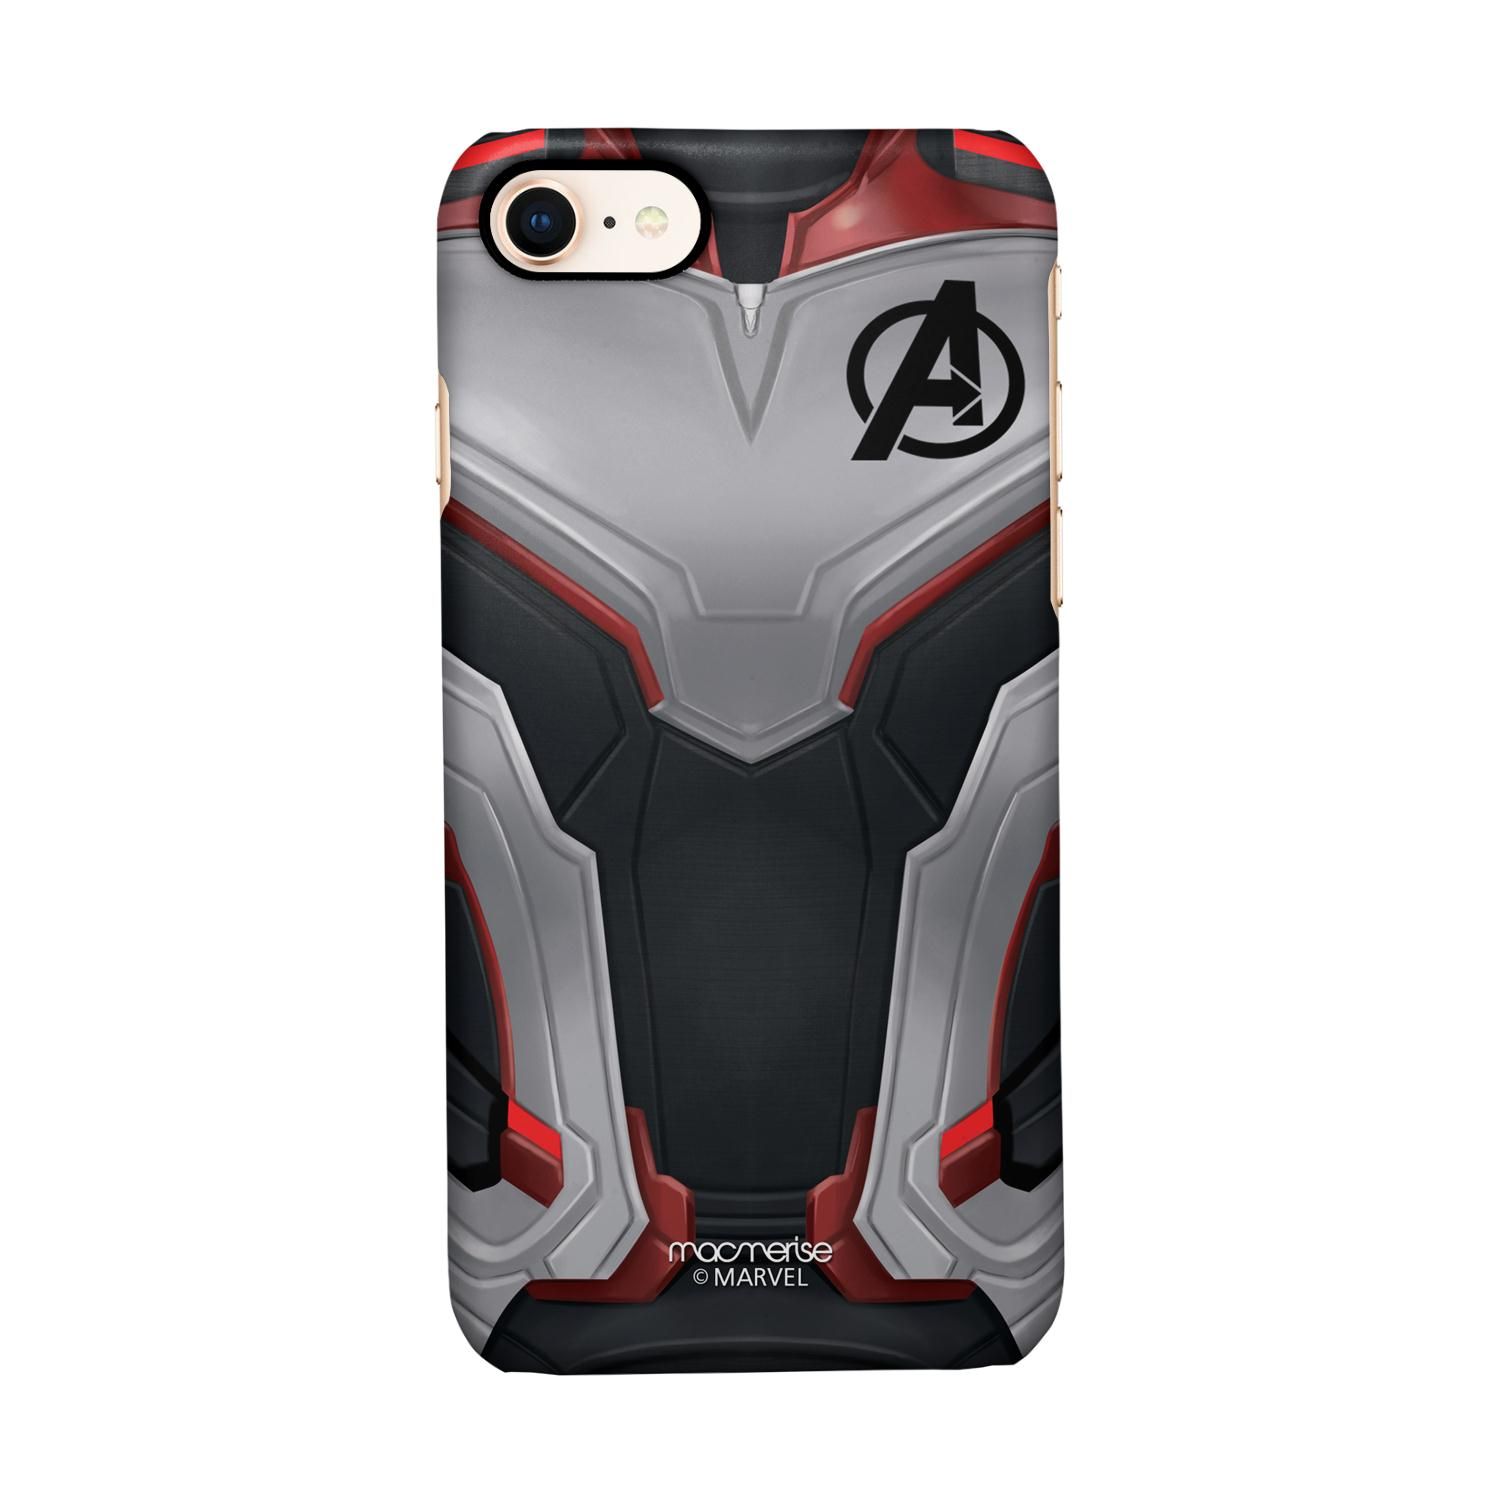 Buy Avengers Endgame Suit - Sleek Phone Case for iPhone 7 Online